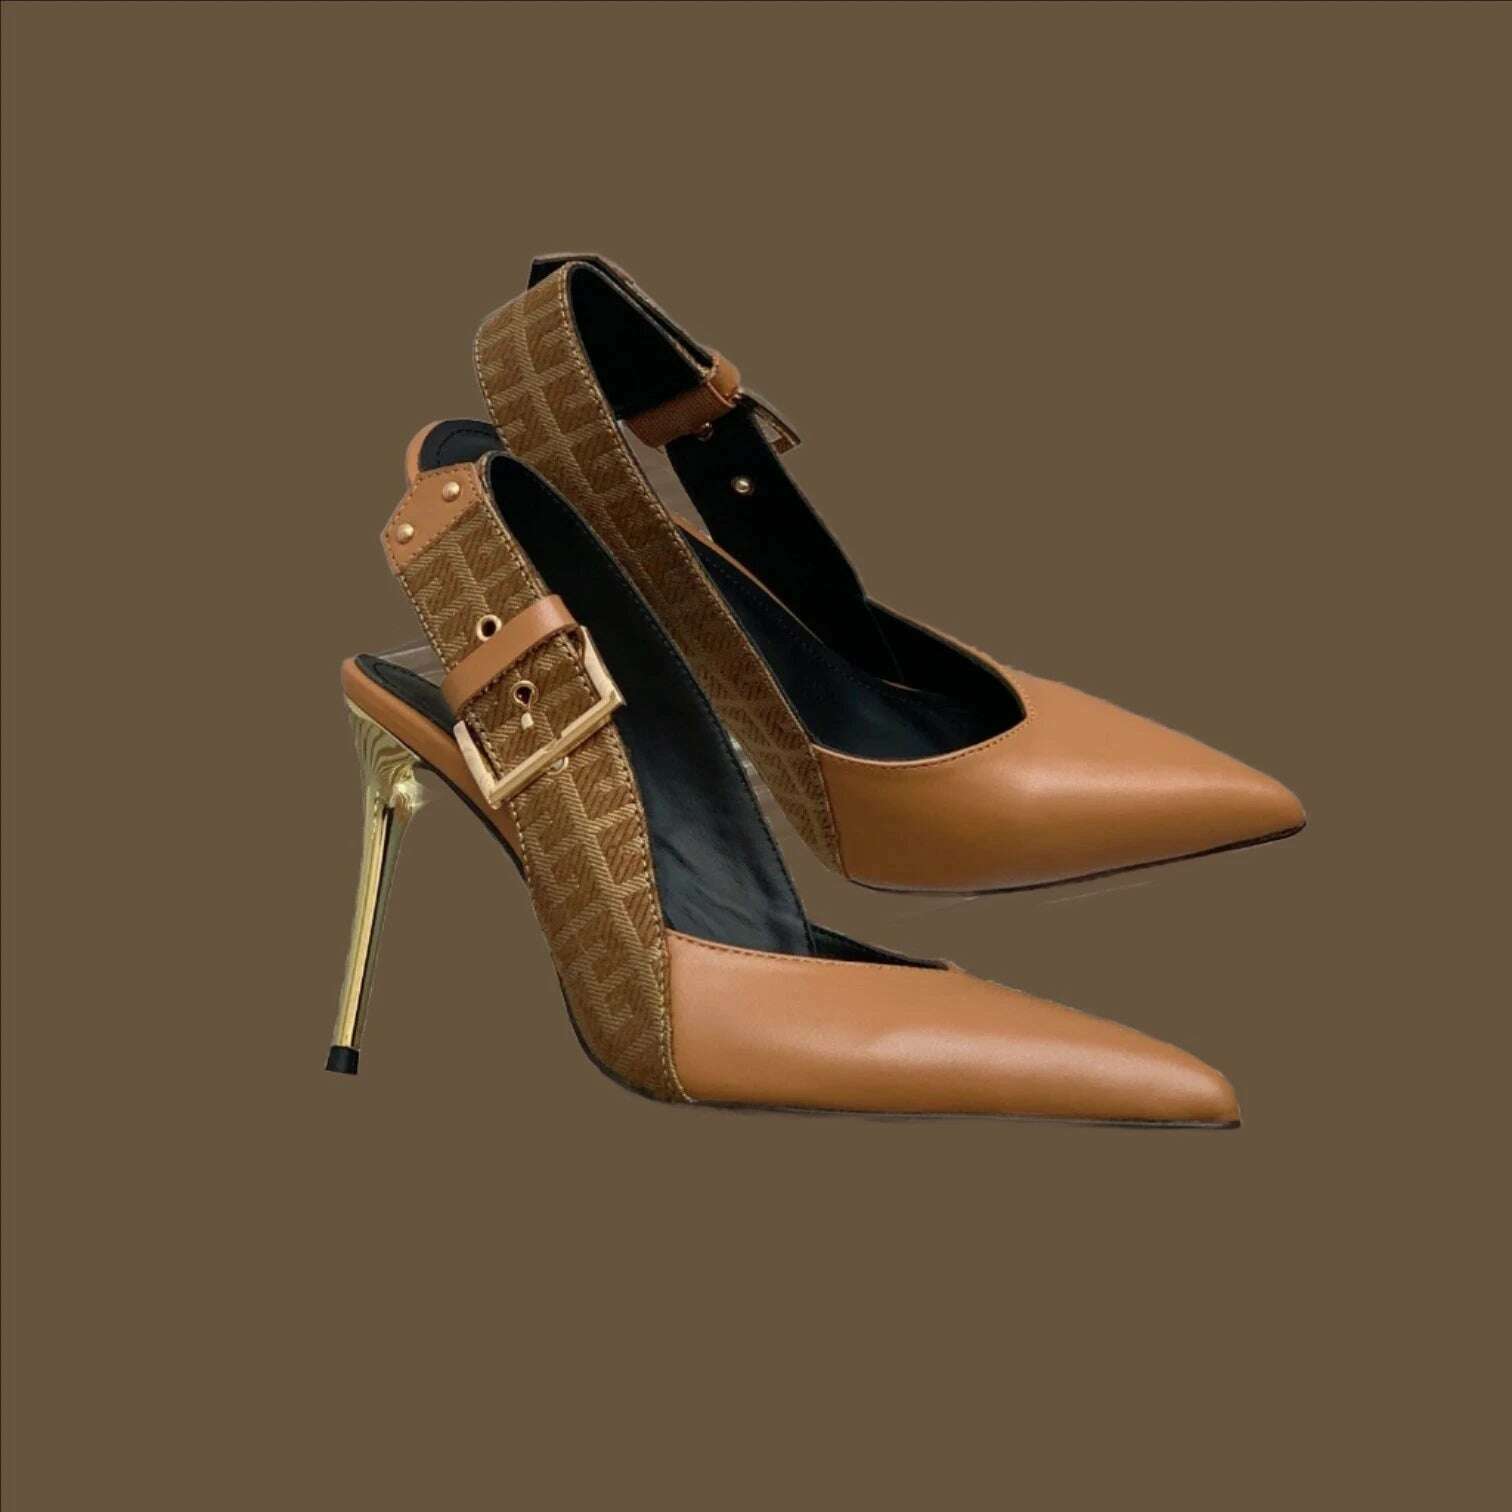 KIMLUD, Spring Autumn Women Women Pumps Fashion Genuine Leather Summer Sandals Super High Heels Print Pumps Slingbacks Party Dress Shoes, as show / 42, KIMLUD Women's Clothes